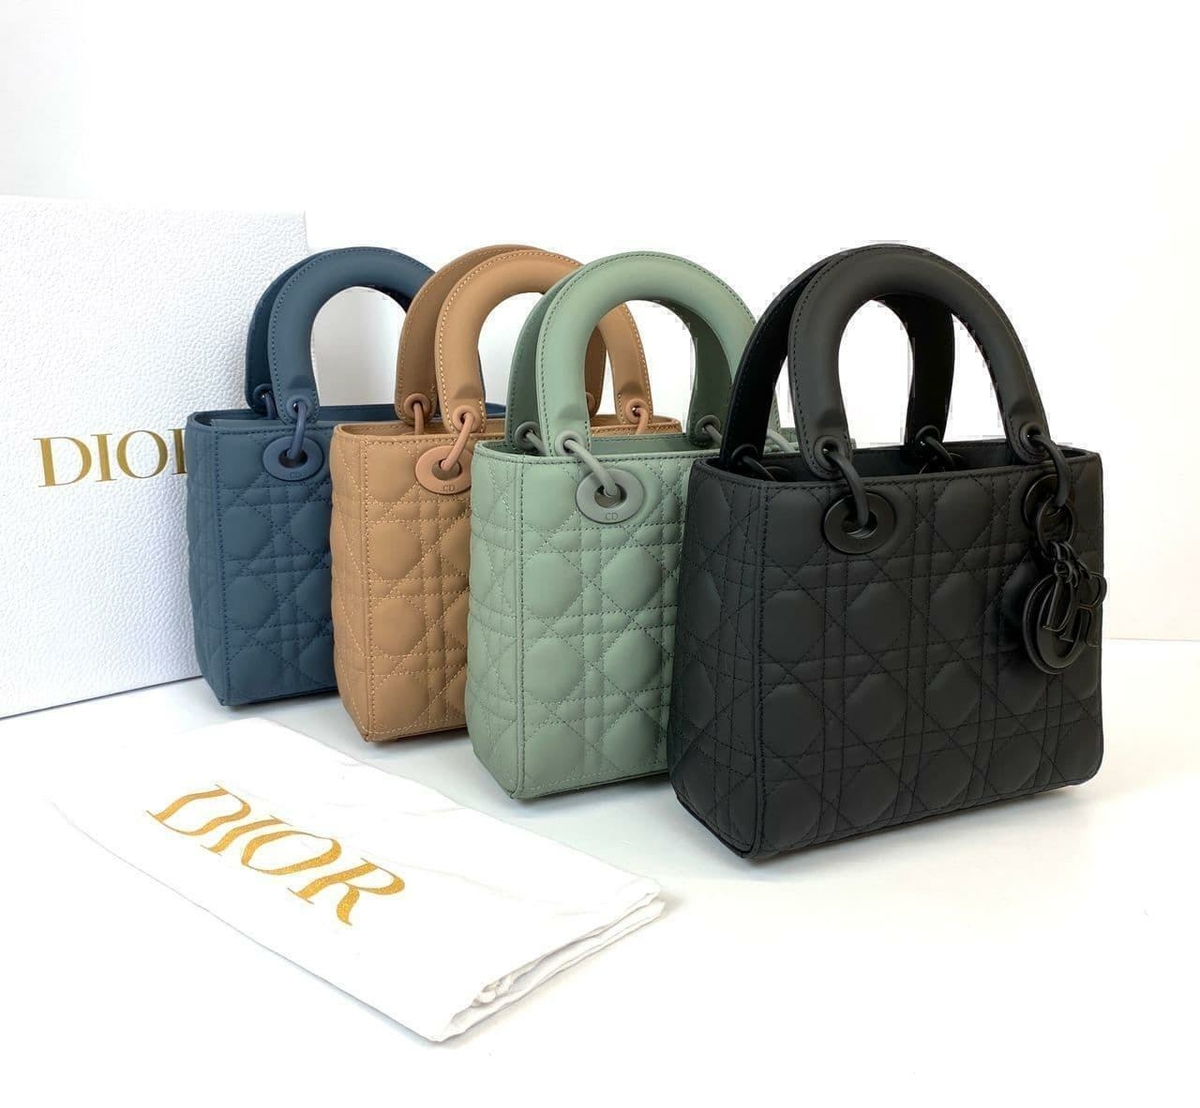 Dior сумка #1 в «Globestyle» арт.656026CU